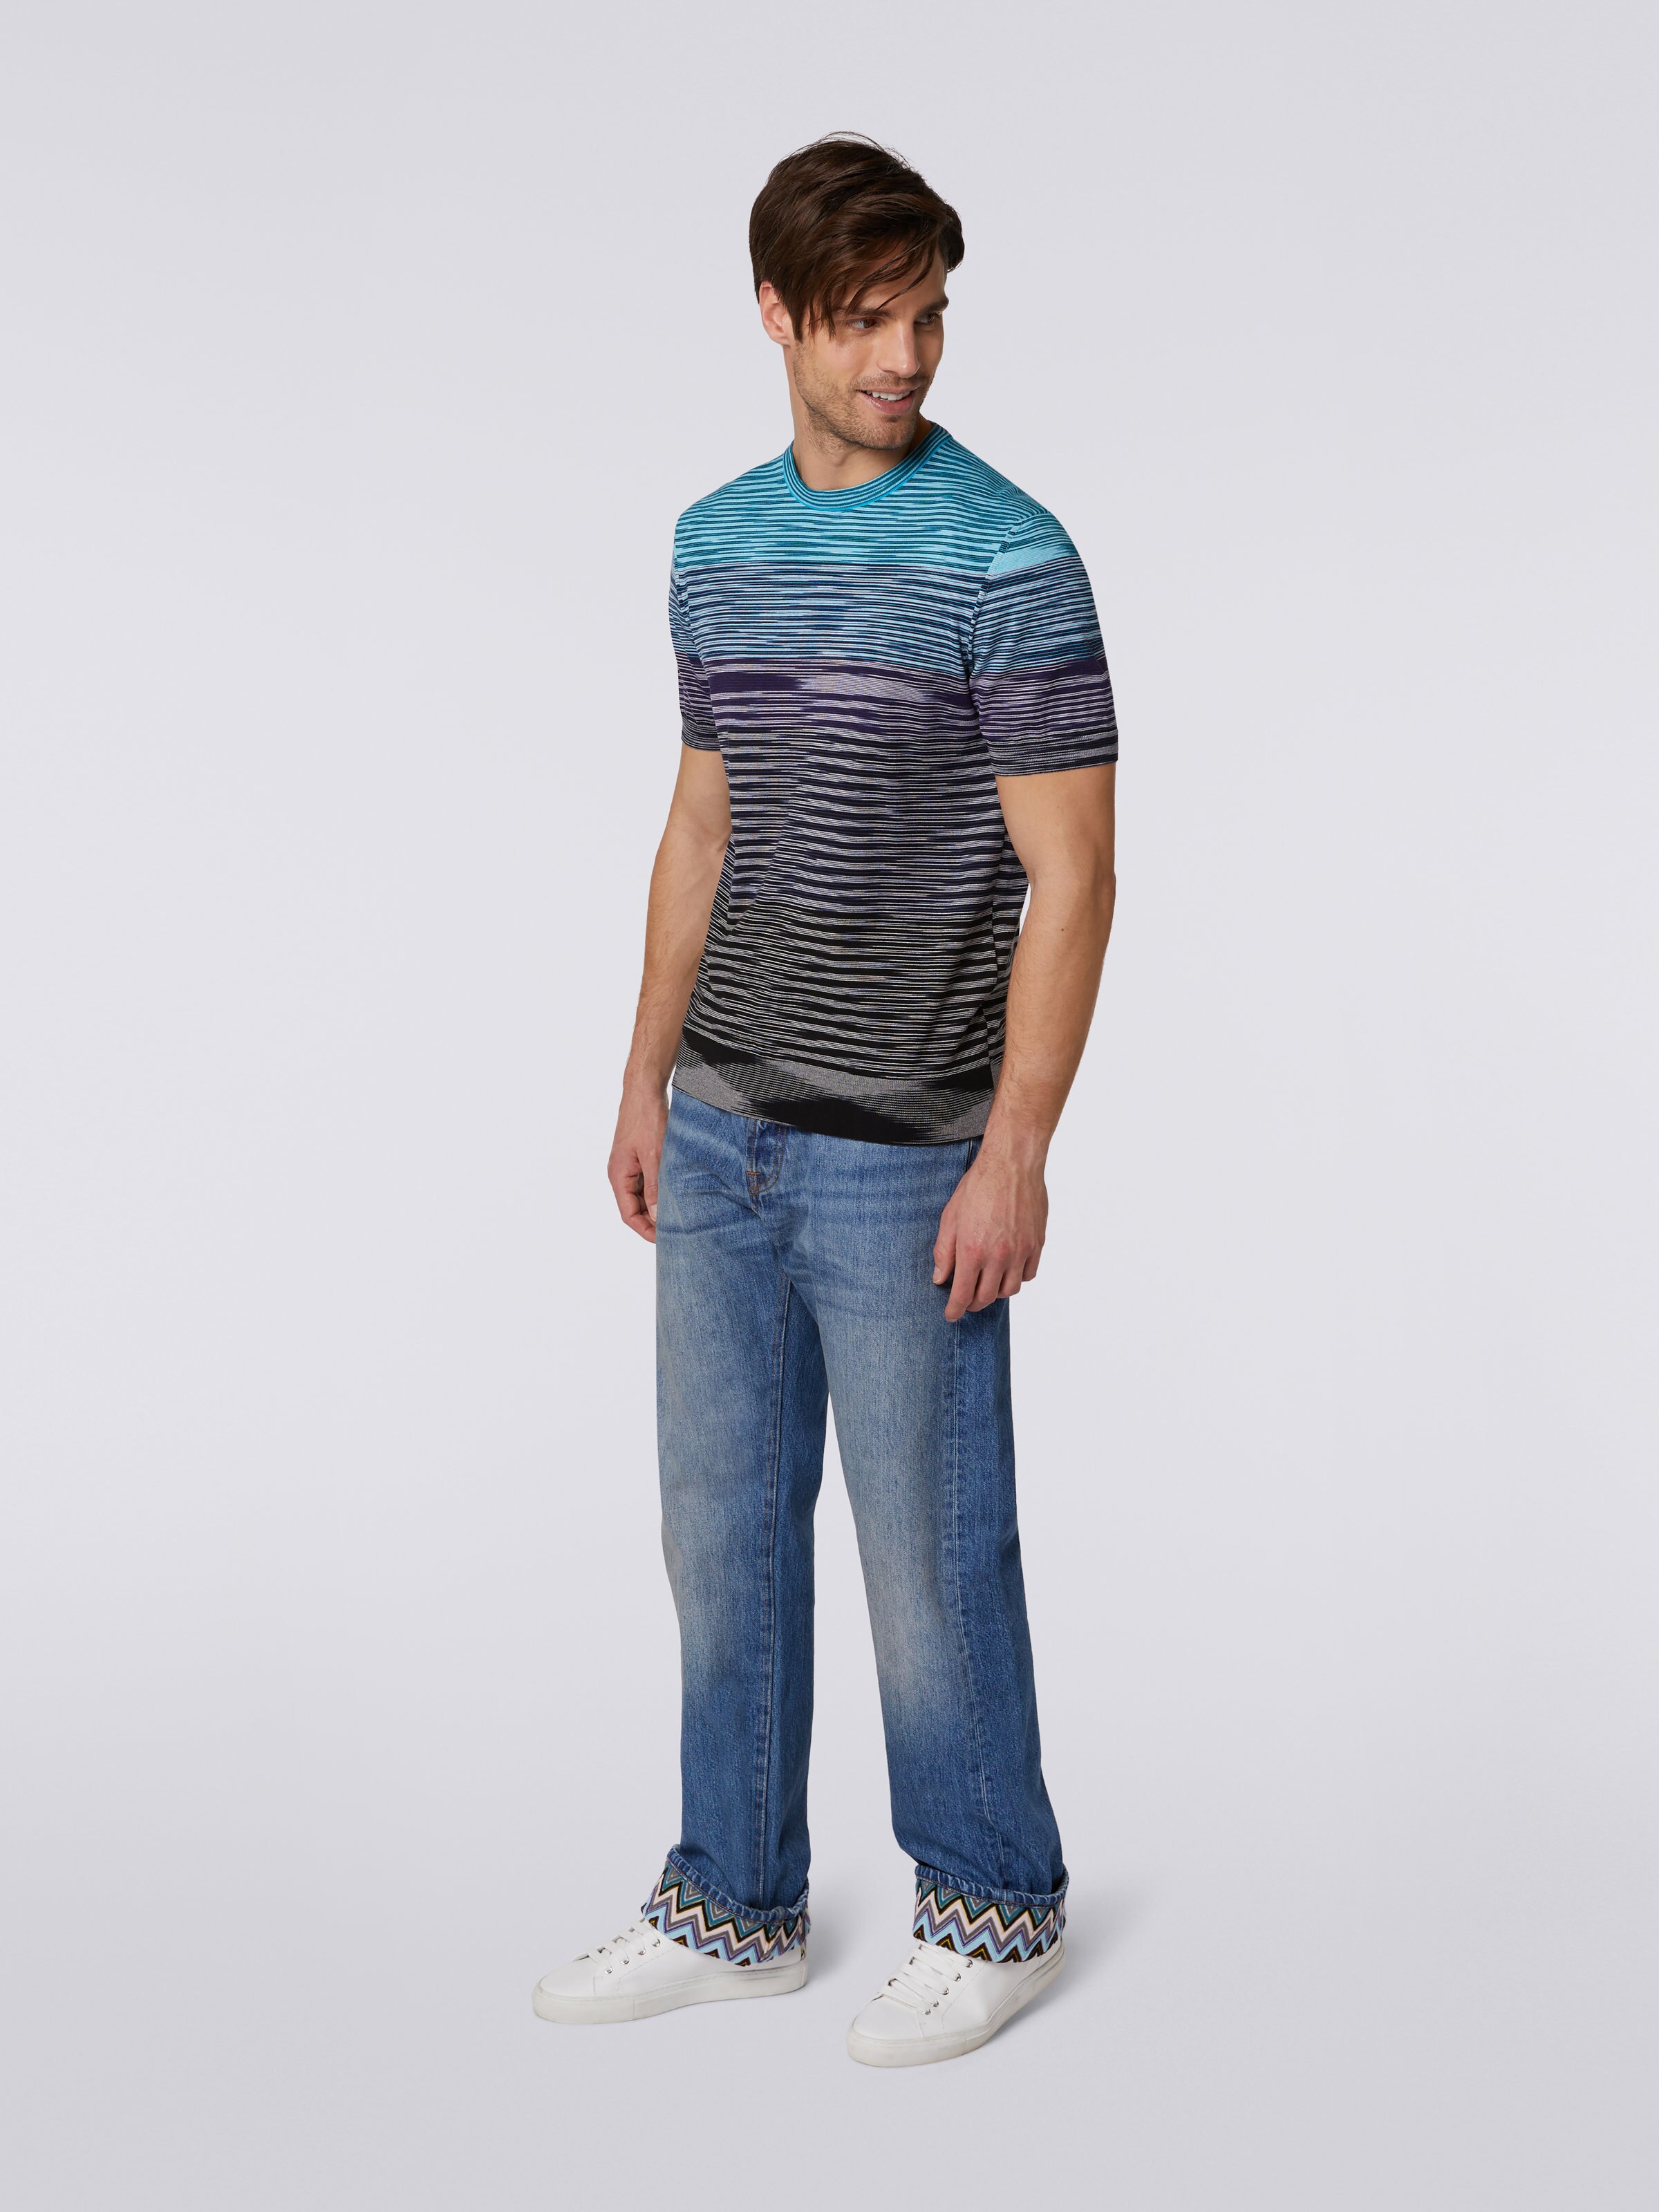 Short-sleeved crew-neck T-shirt in cotton knit with dégradé stripes, Blue, Purple & Black - 2